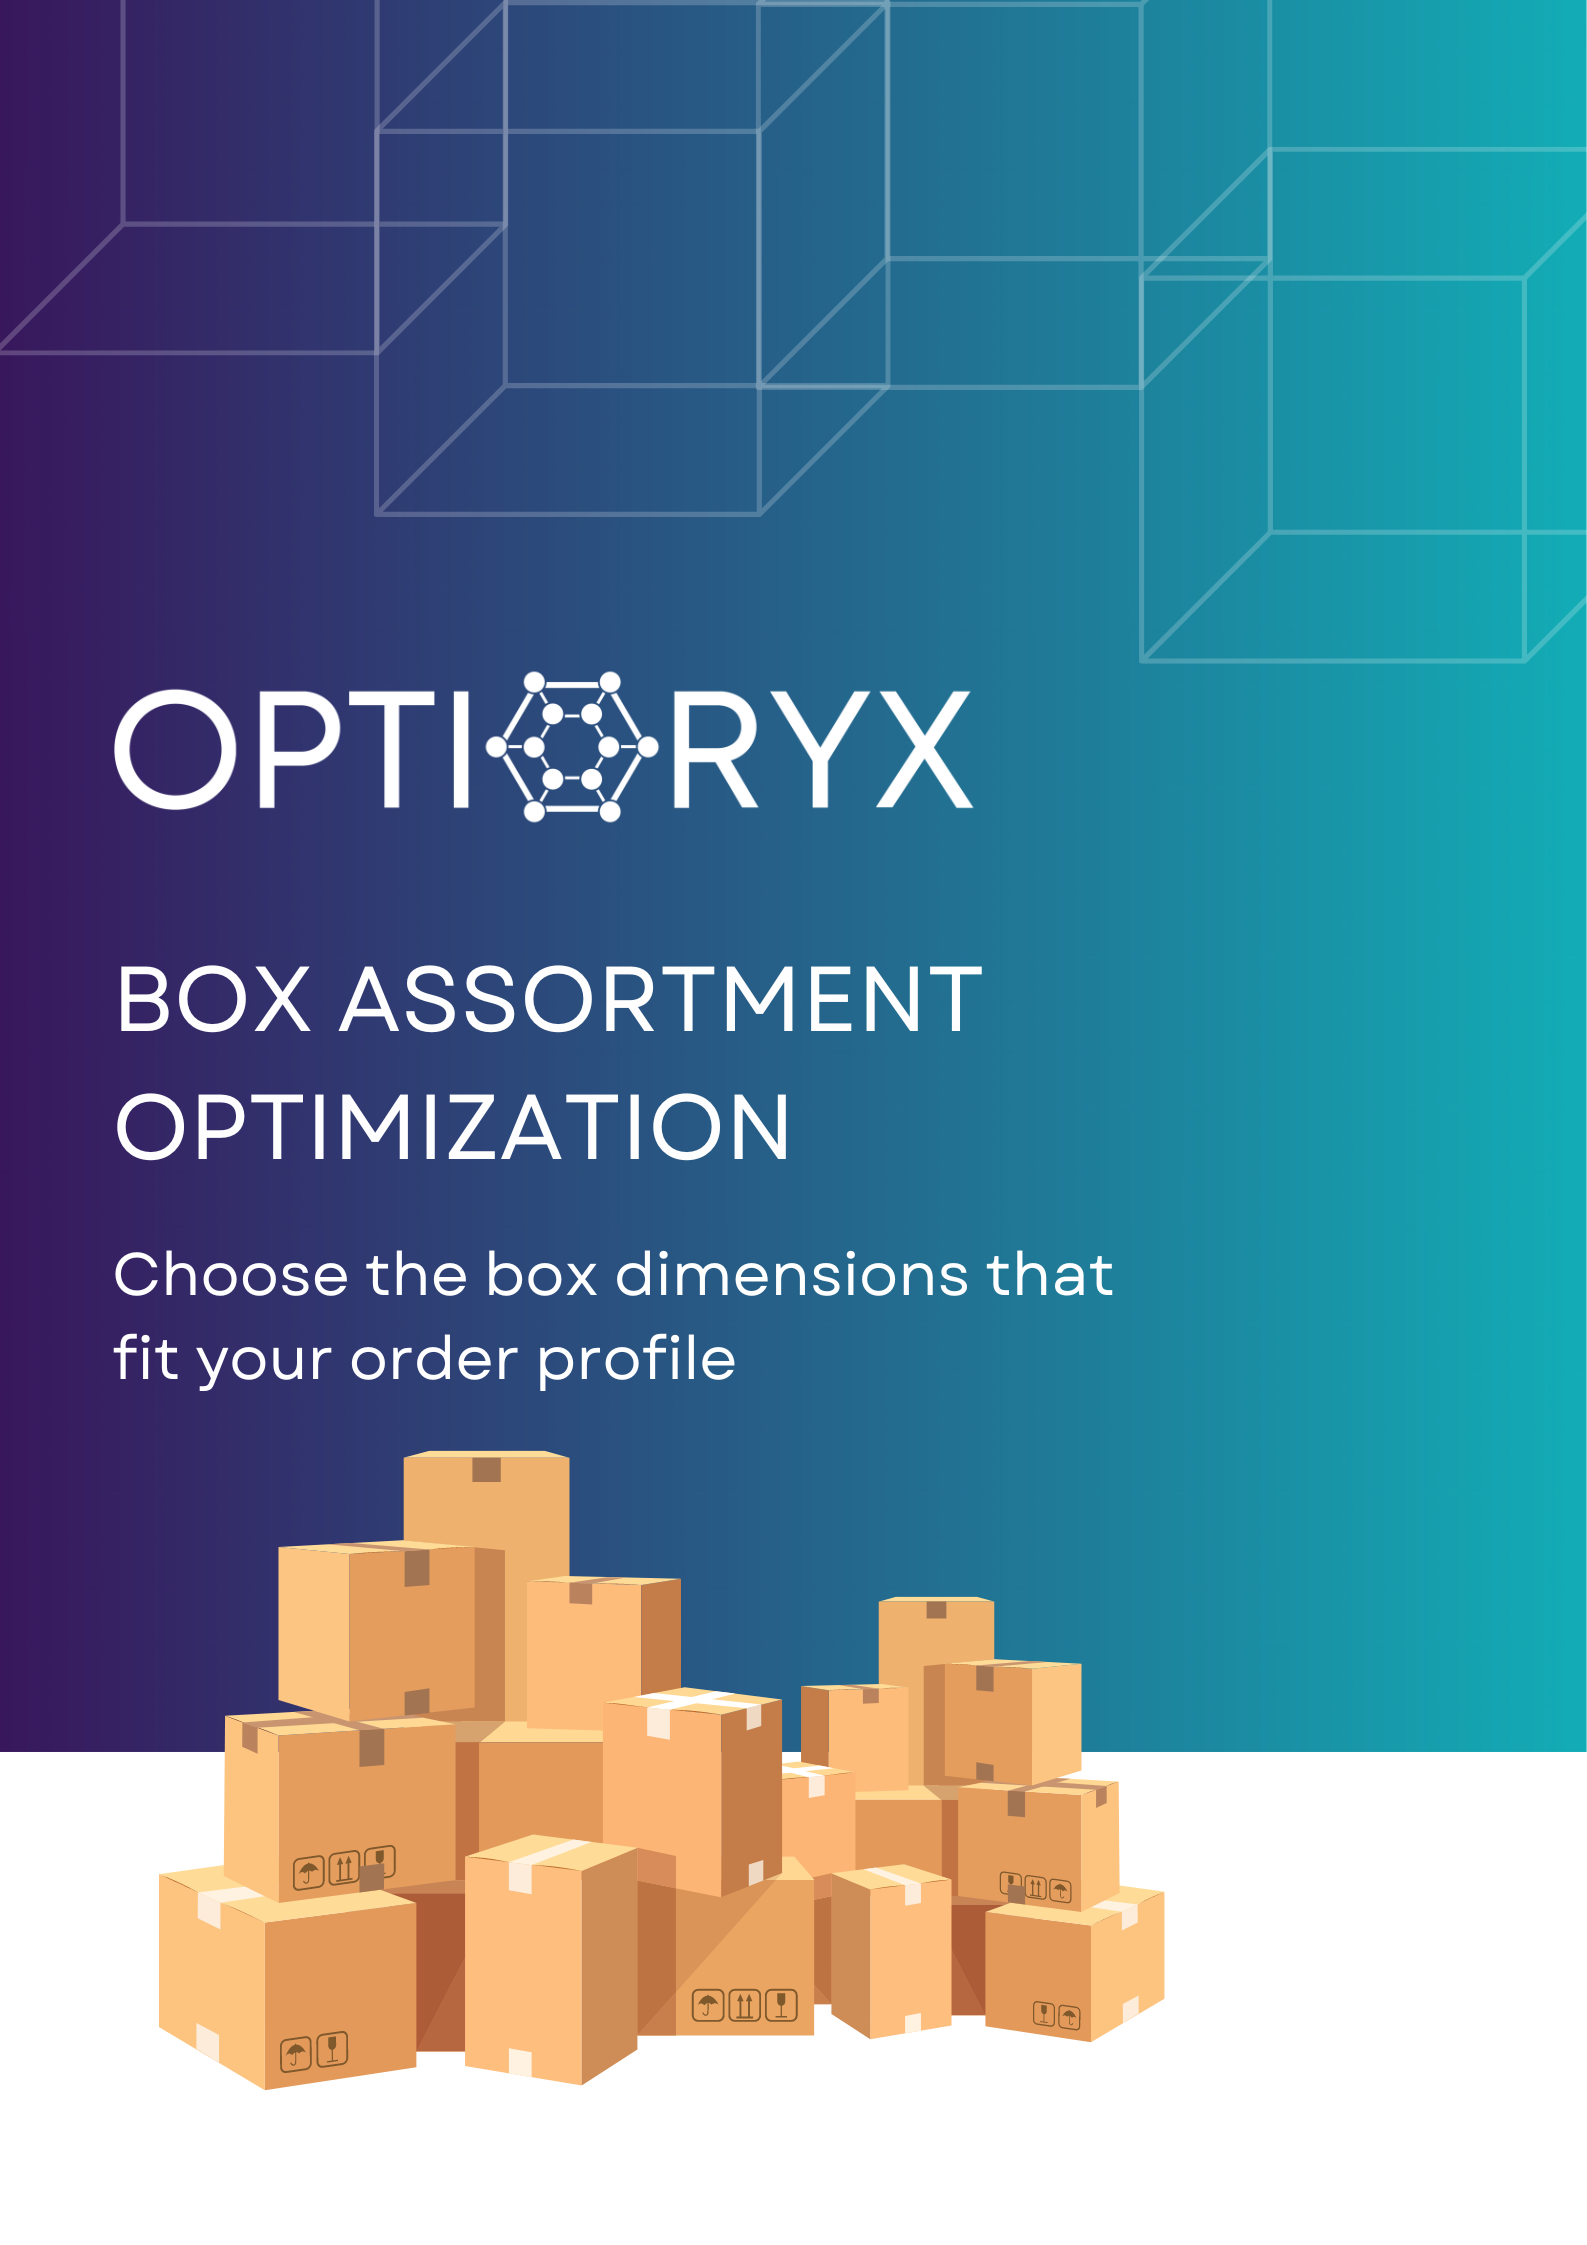 Box assortment optimization